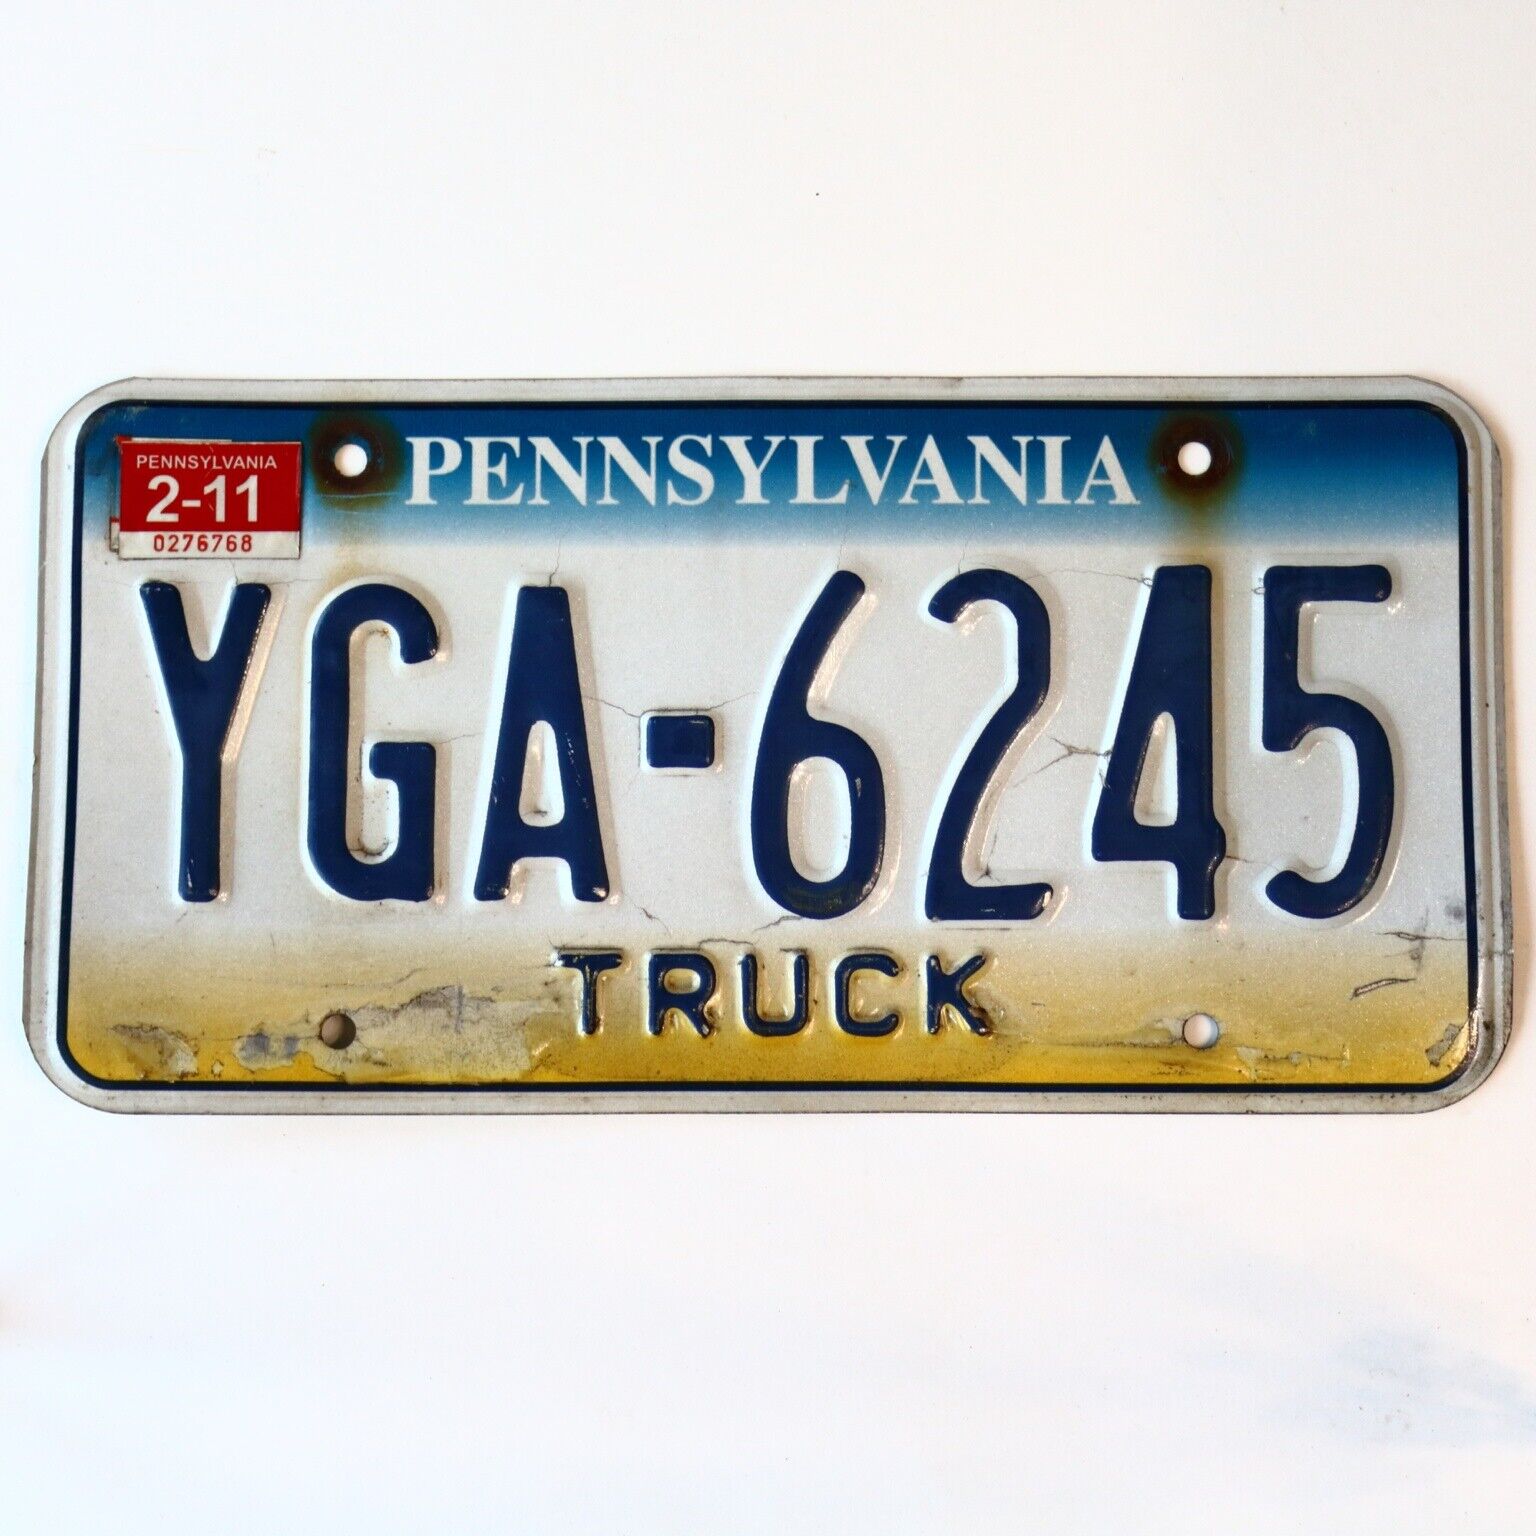 2011 United States Pennsylvania Base Truck License Plate YGA-6245